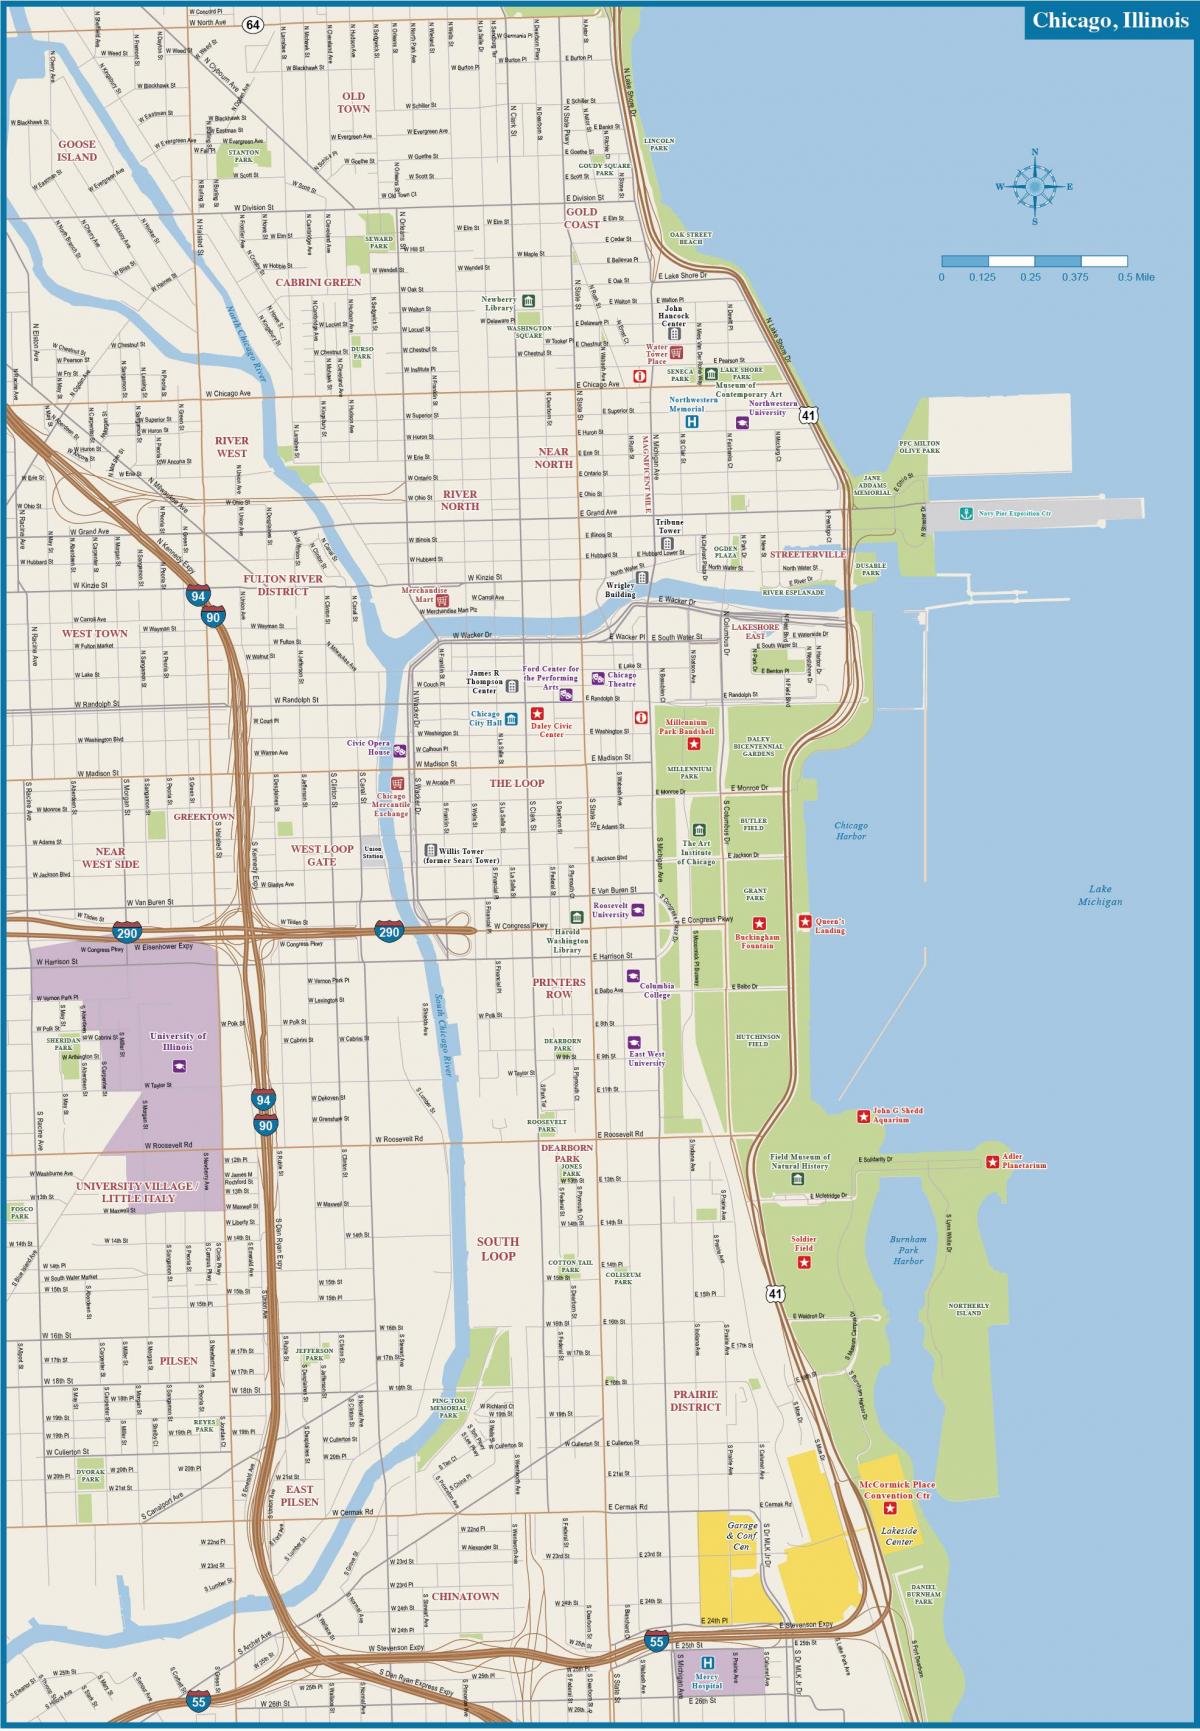 Chicago city center map